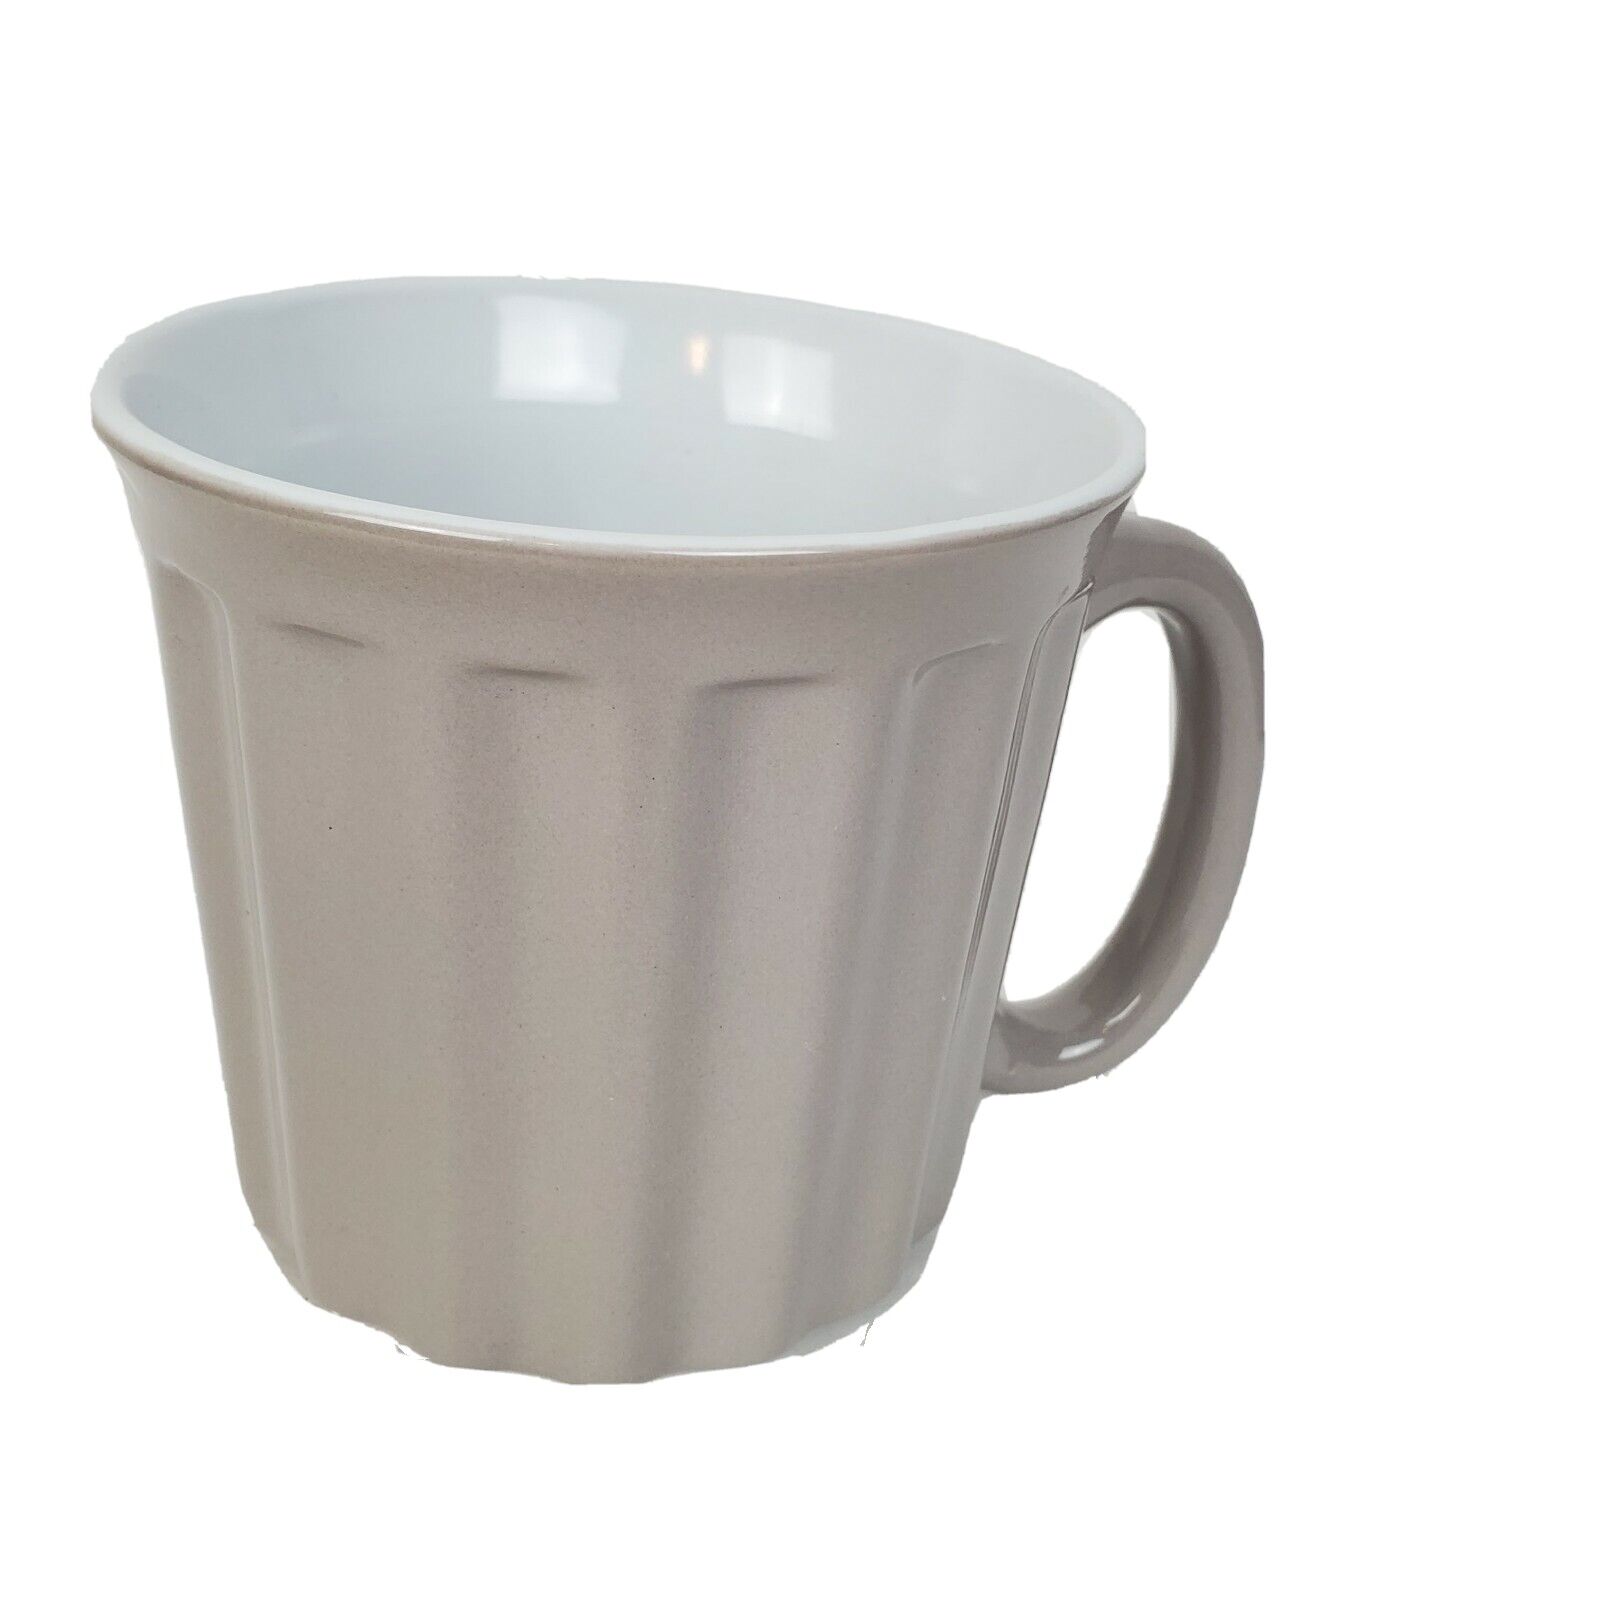 Crofton Coffee Mug Cup Lavender Gray Solid 20 fl oz. Microwave Dishwasher Safe